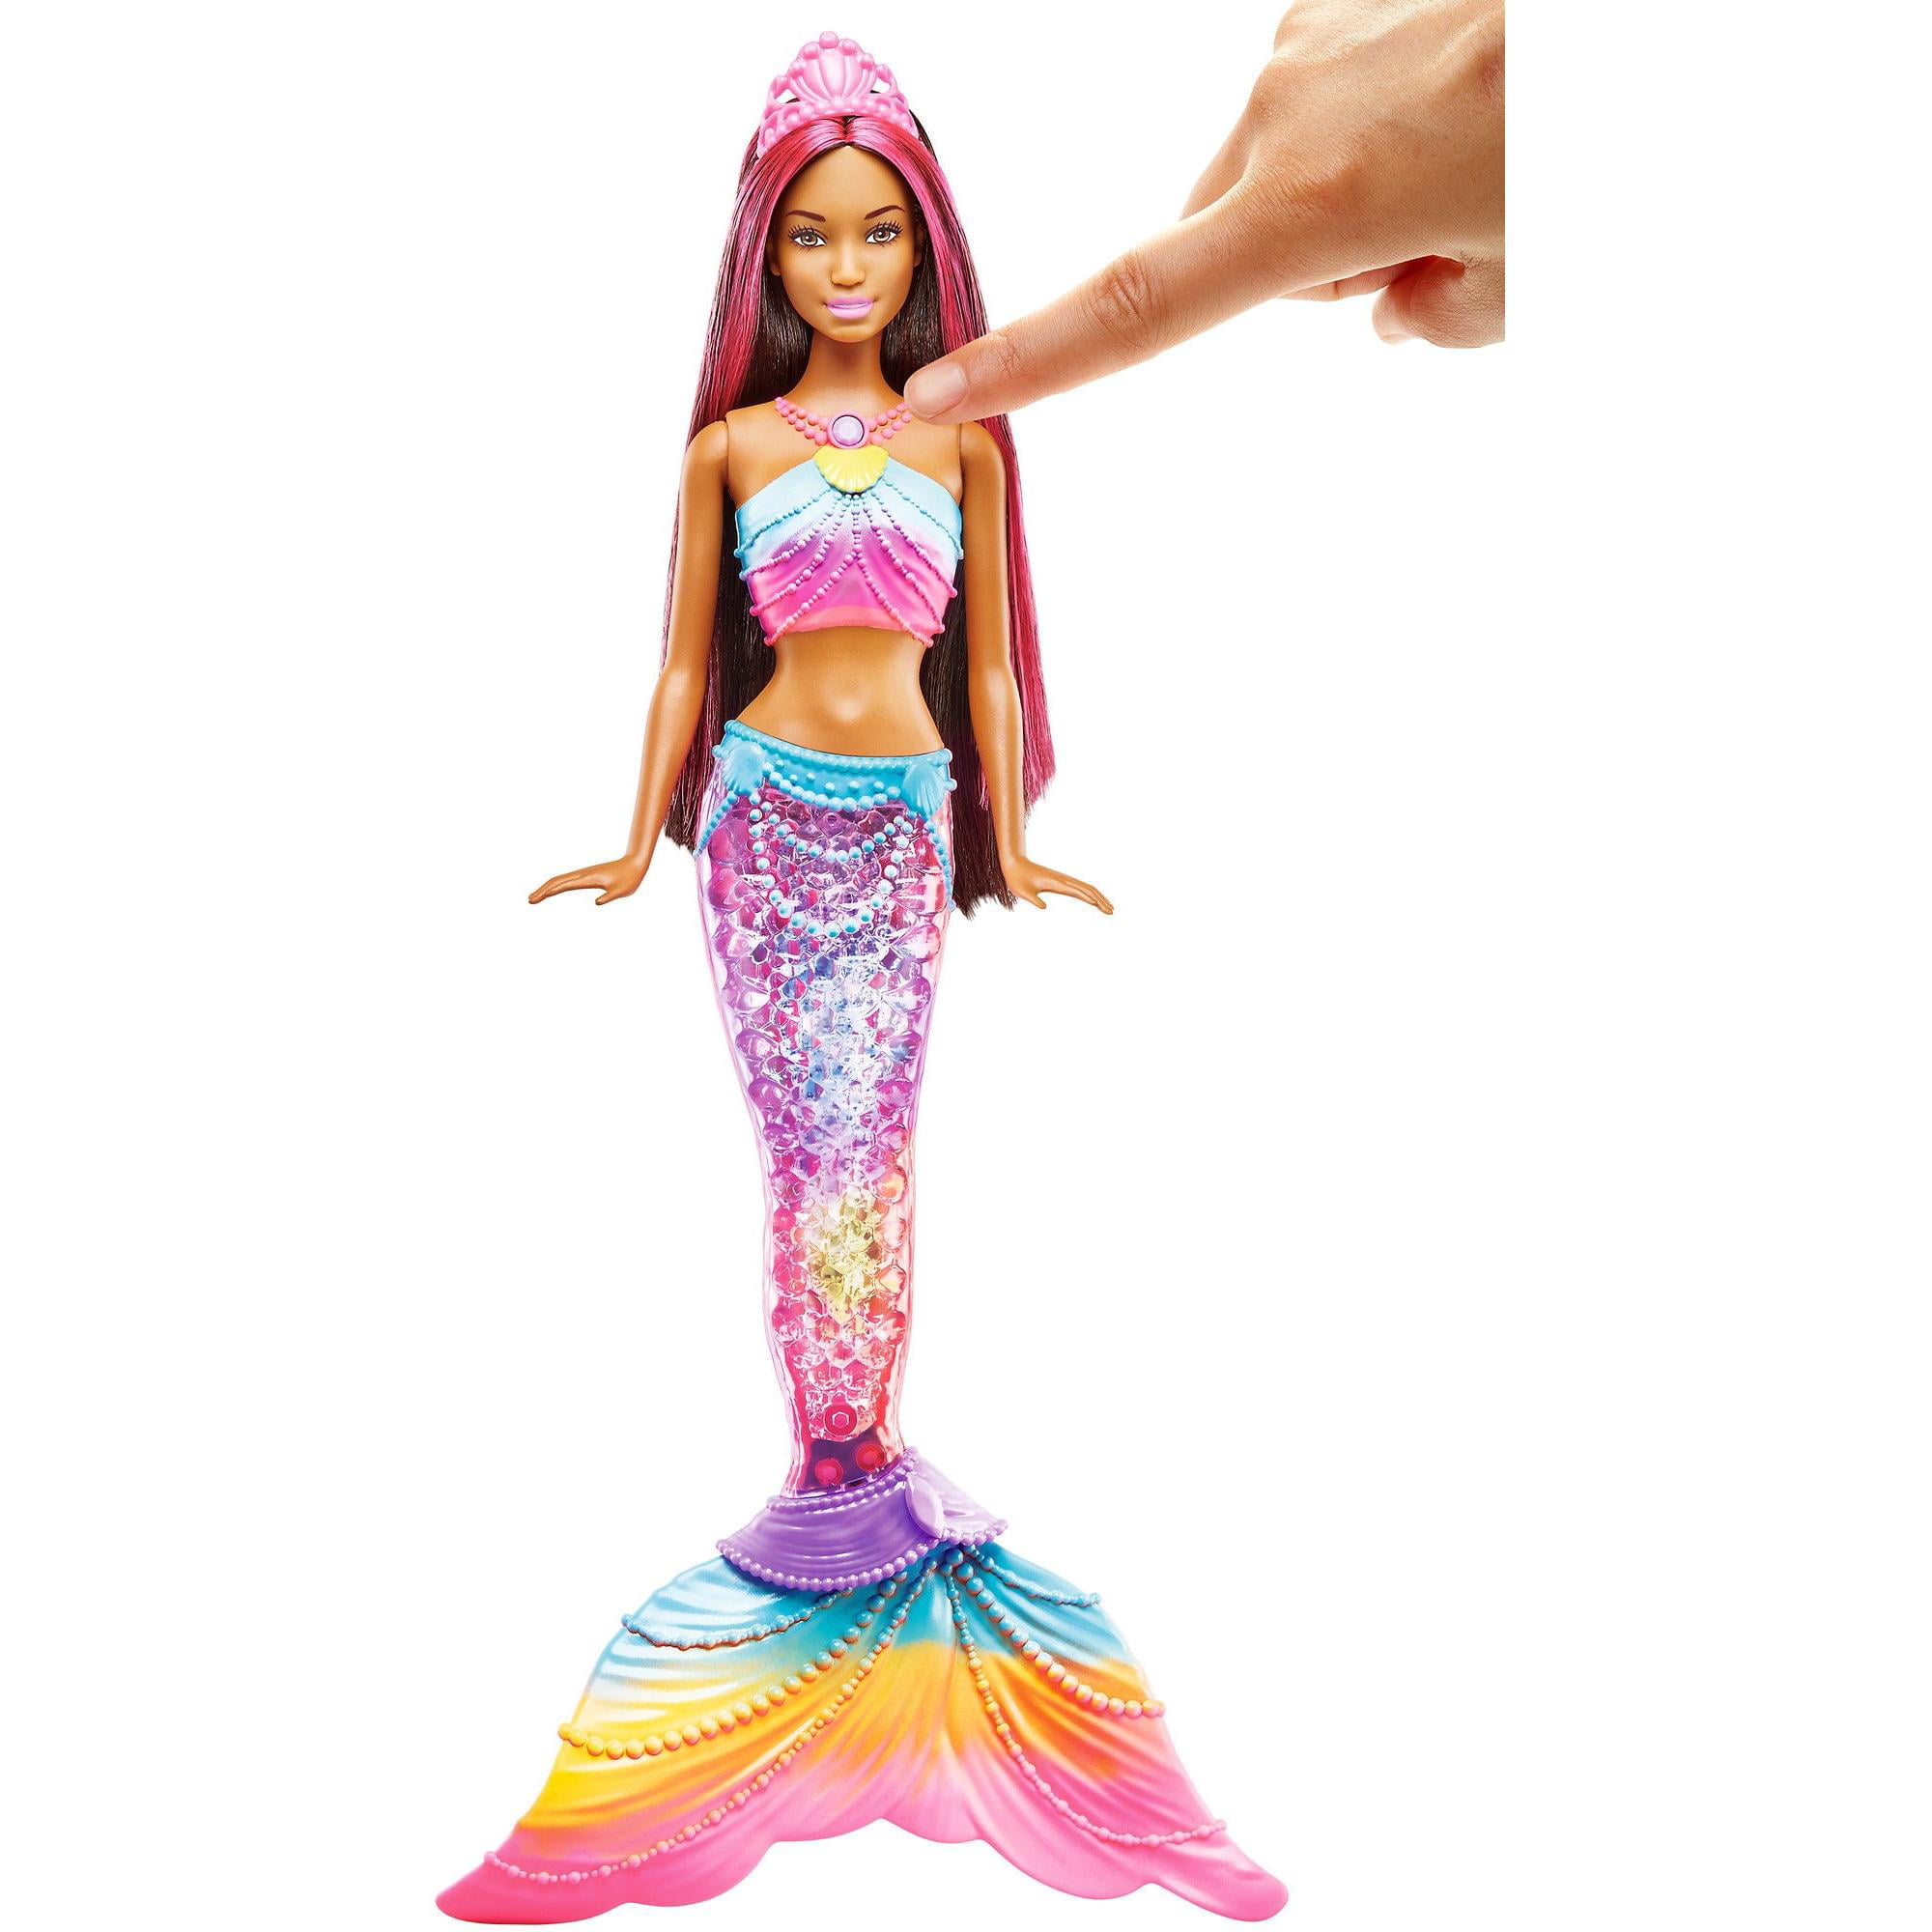 barbie turns into a mermaid